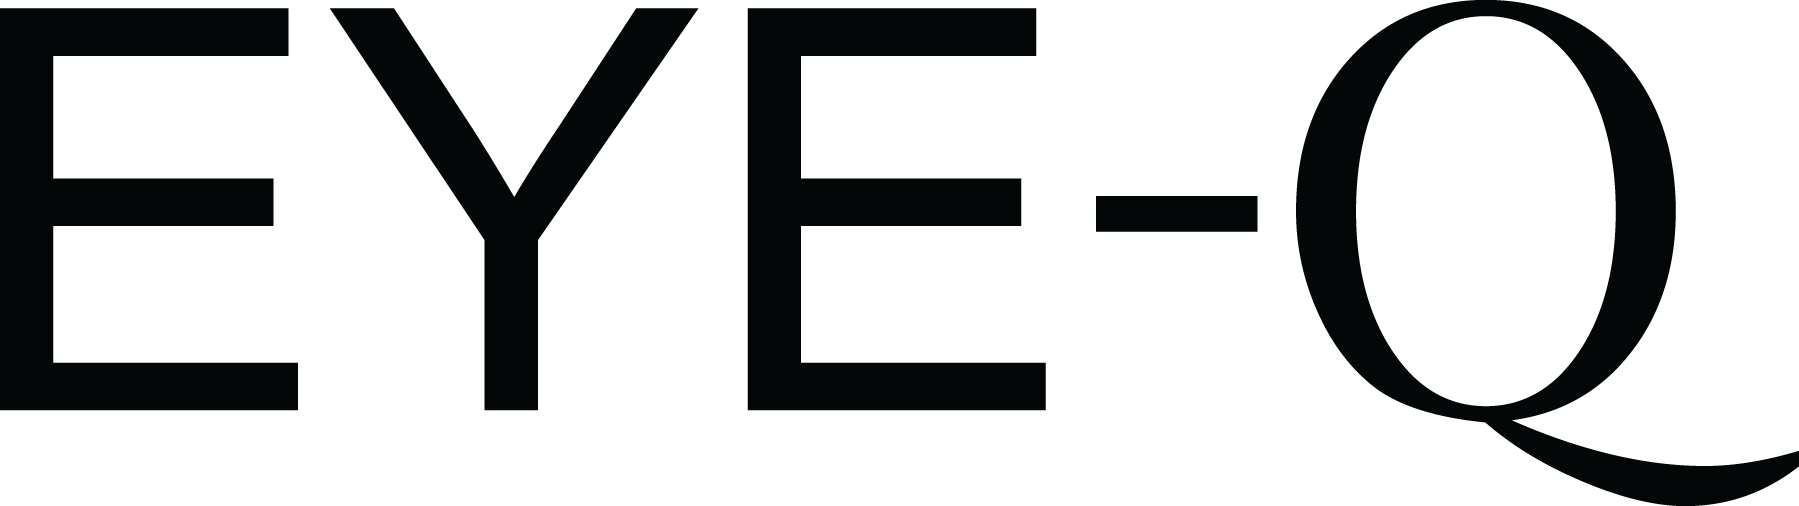 EYE Q transparent logo